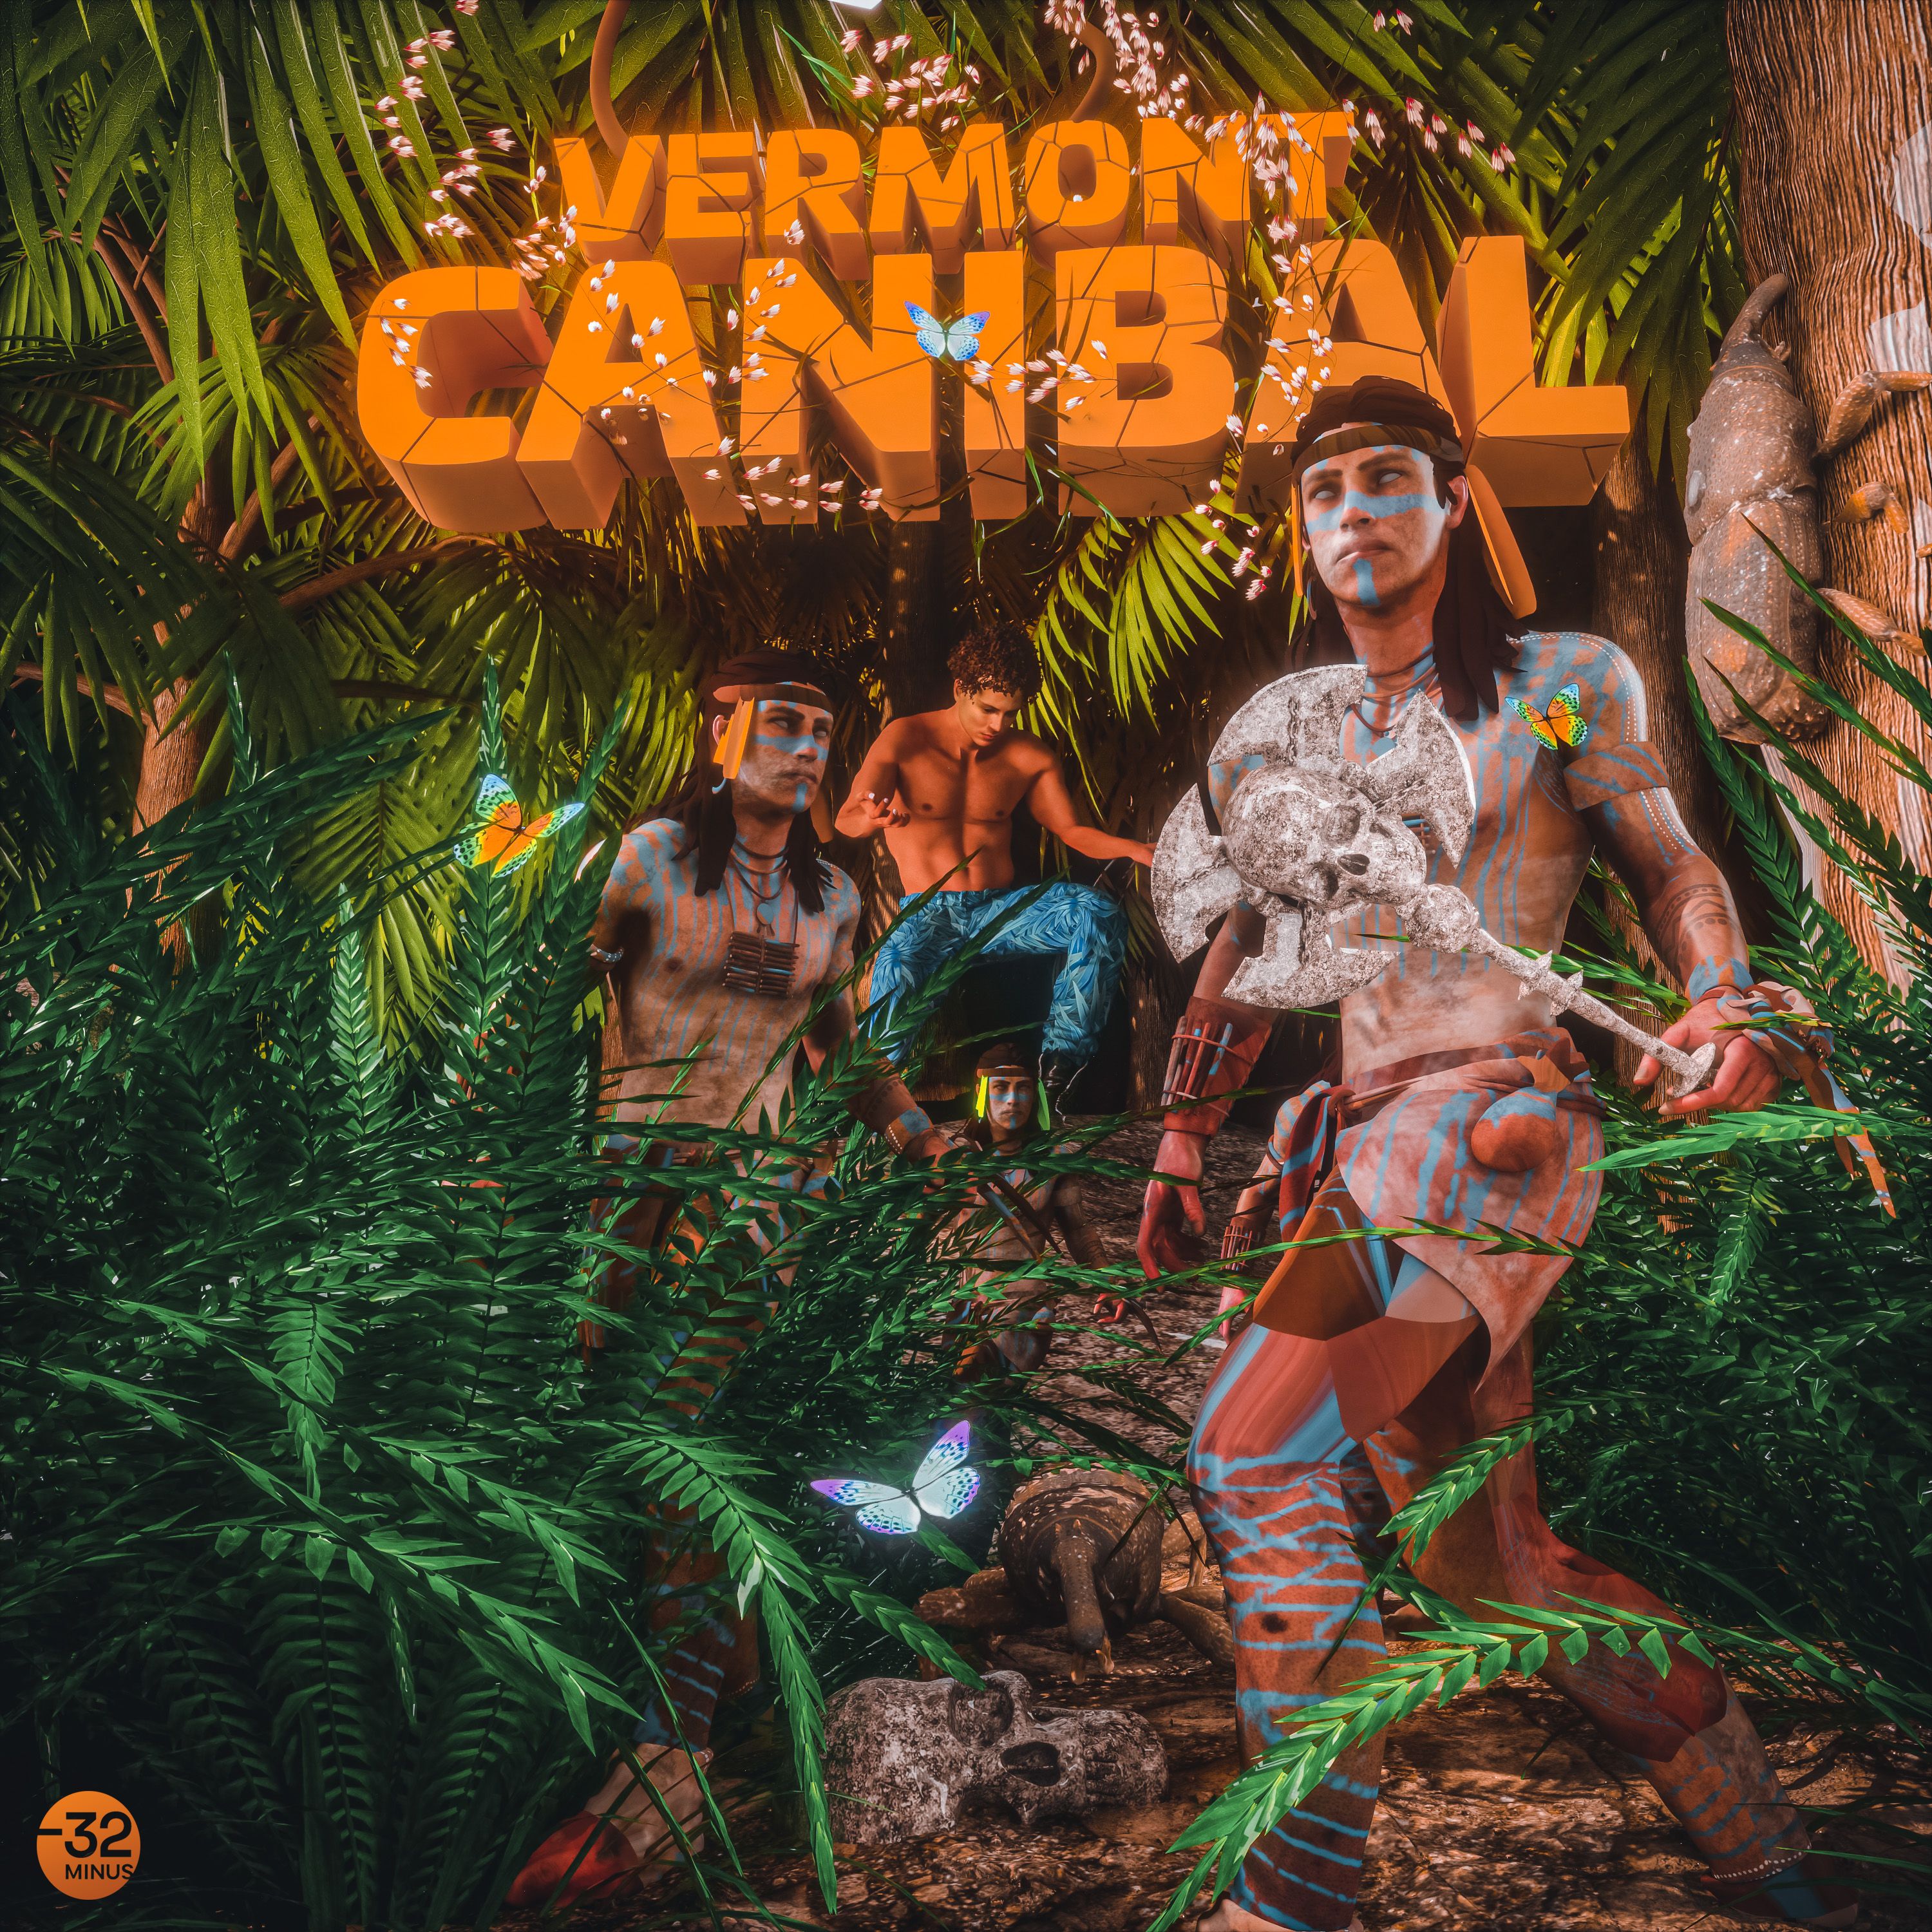 डाउनलोड करा Vermont - Canibal (Original Mix)